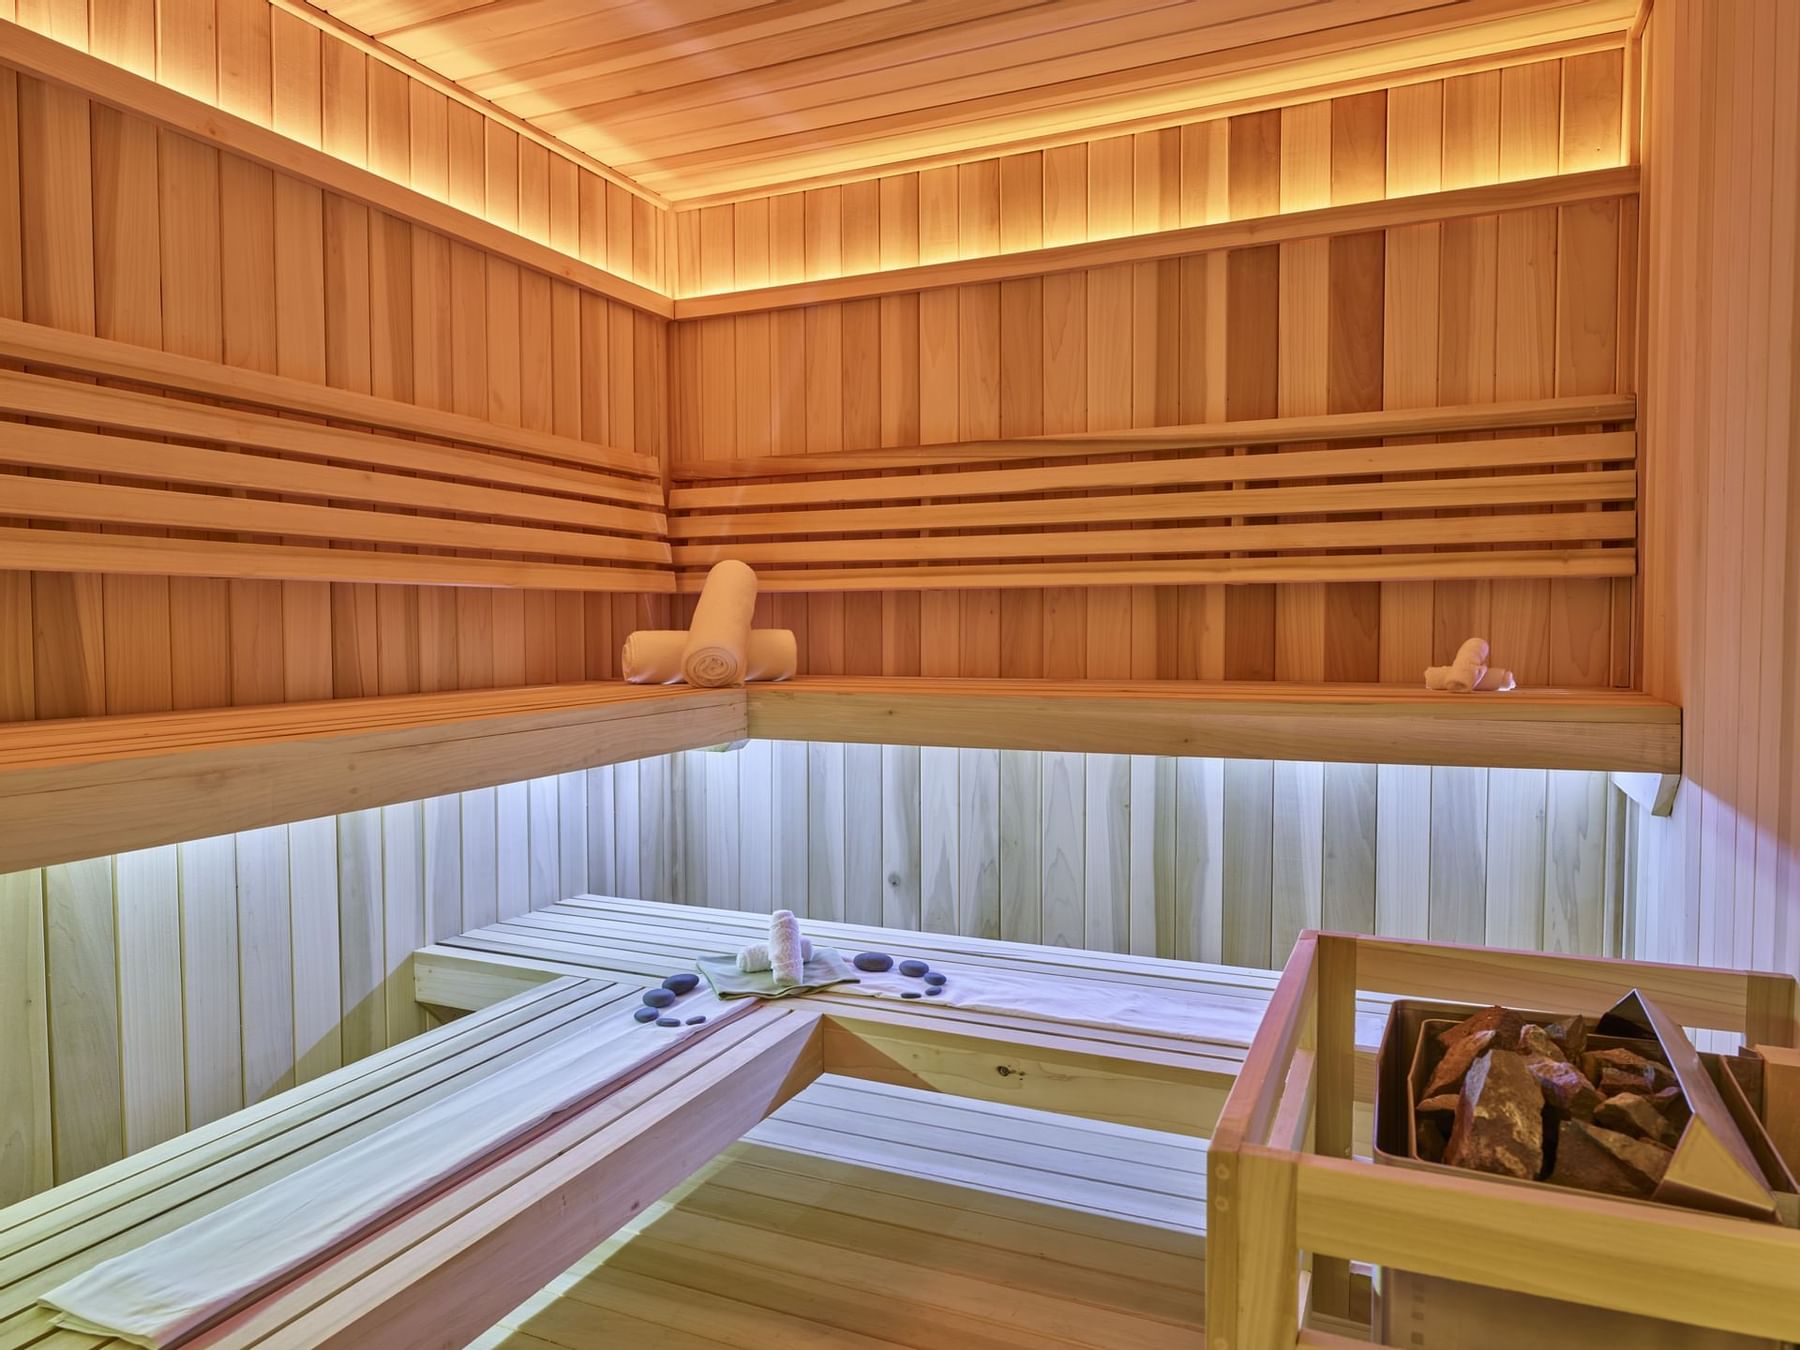 Interior of the relaxing Sauna Room at La Colección Resorts